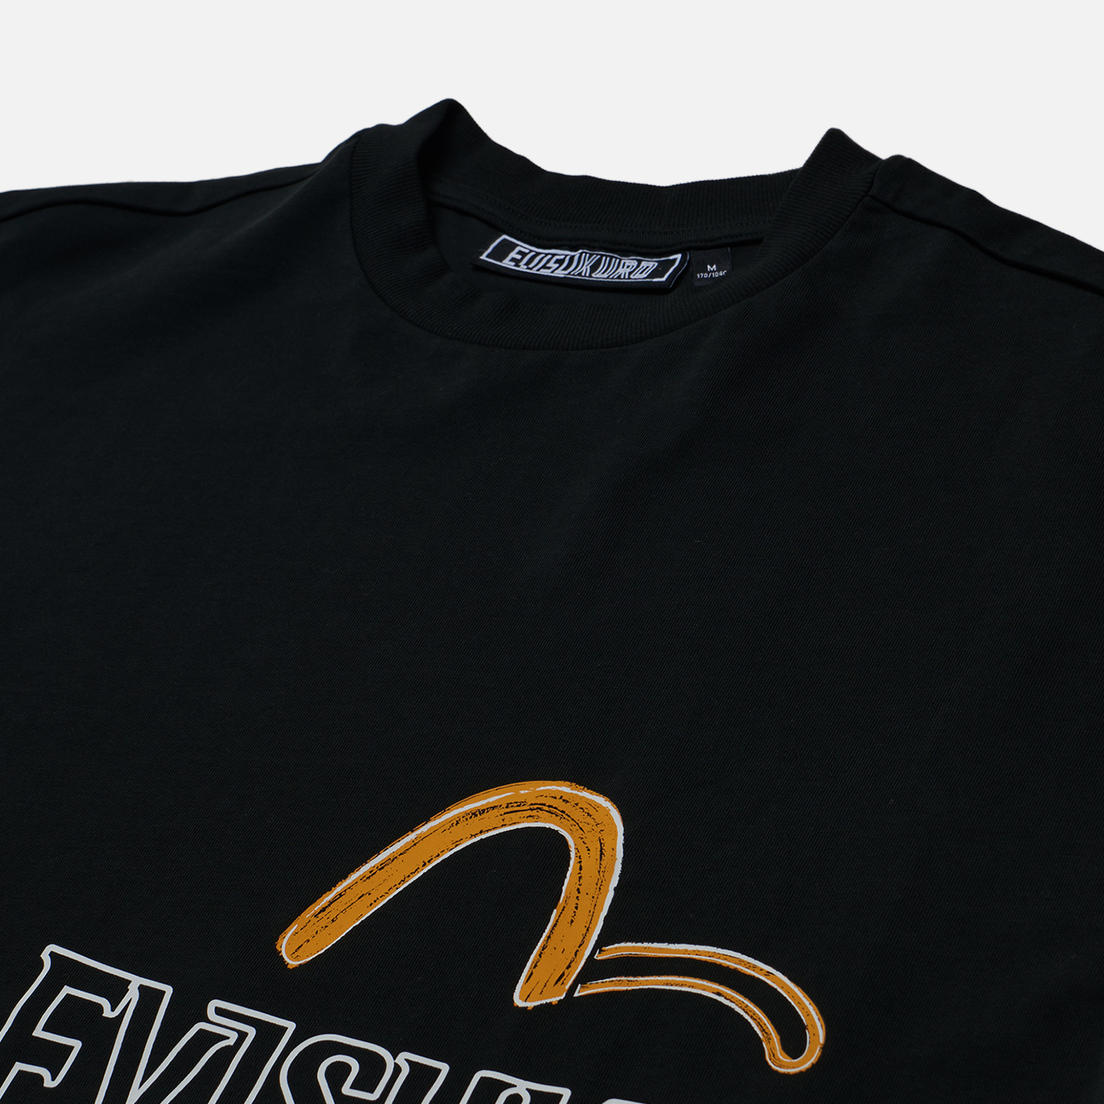 Evisu Мужская футболка Evisukuro With Side Logo